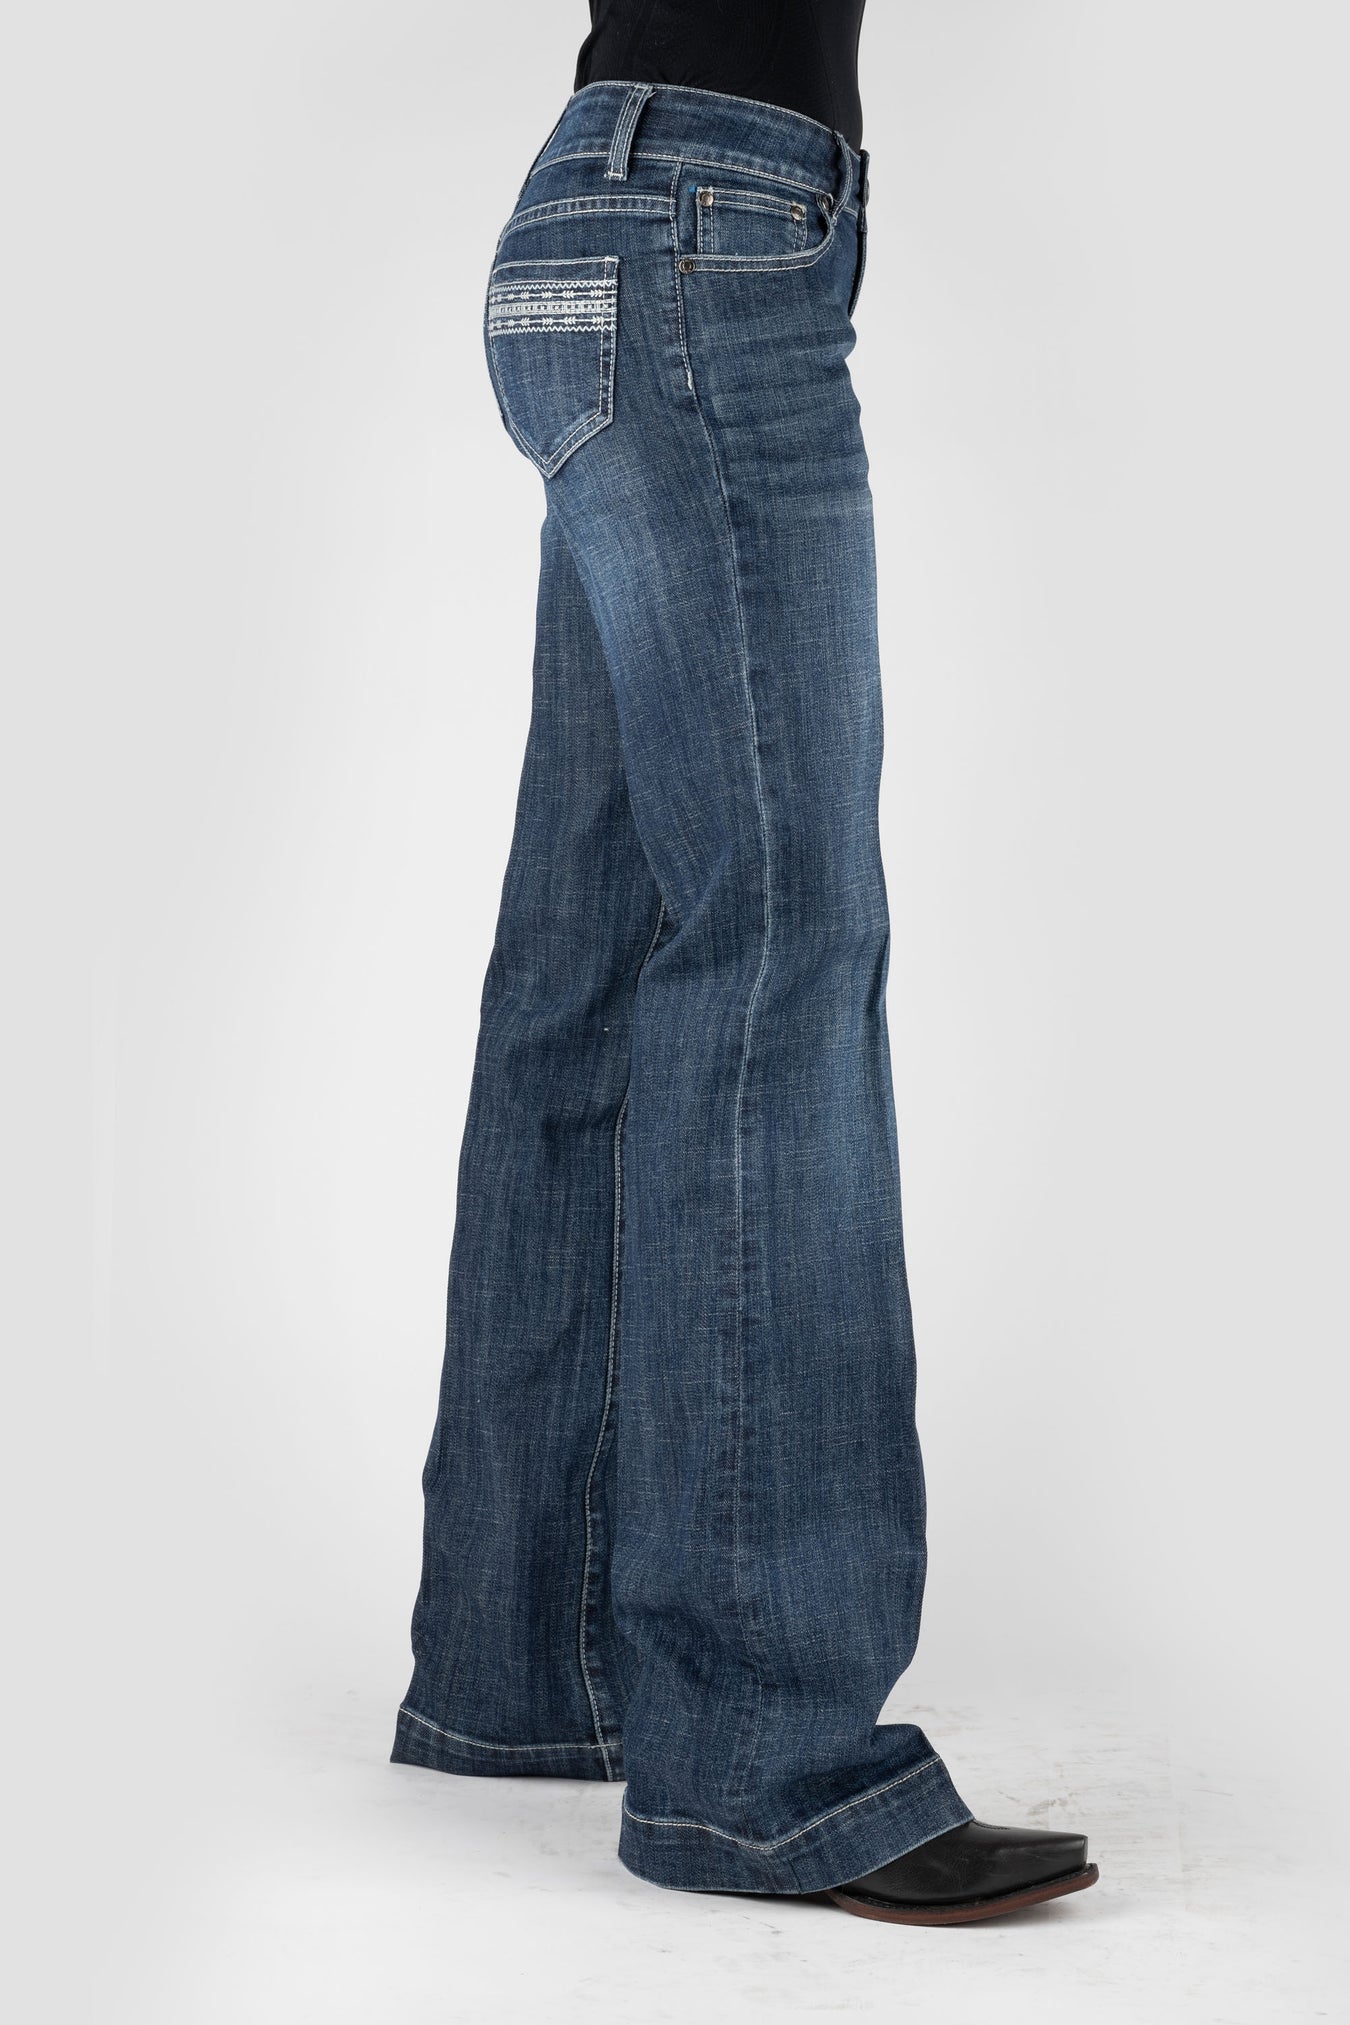 Women's Tin Haul Jeans & Bottoms